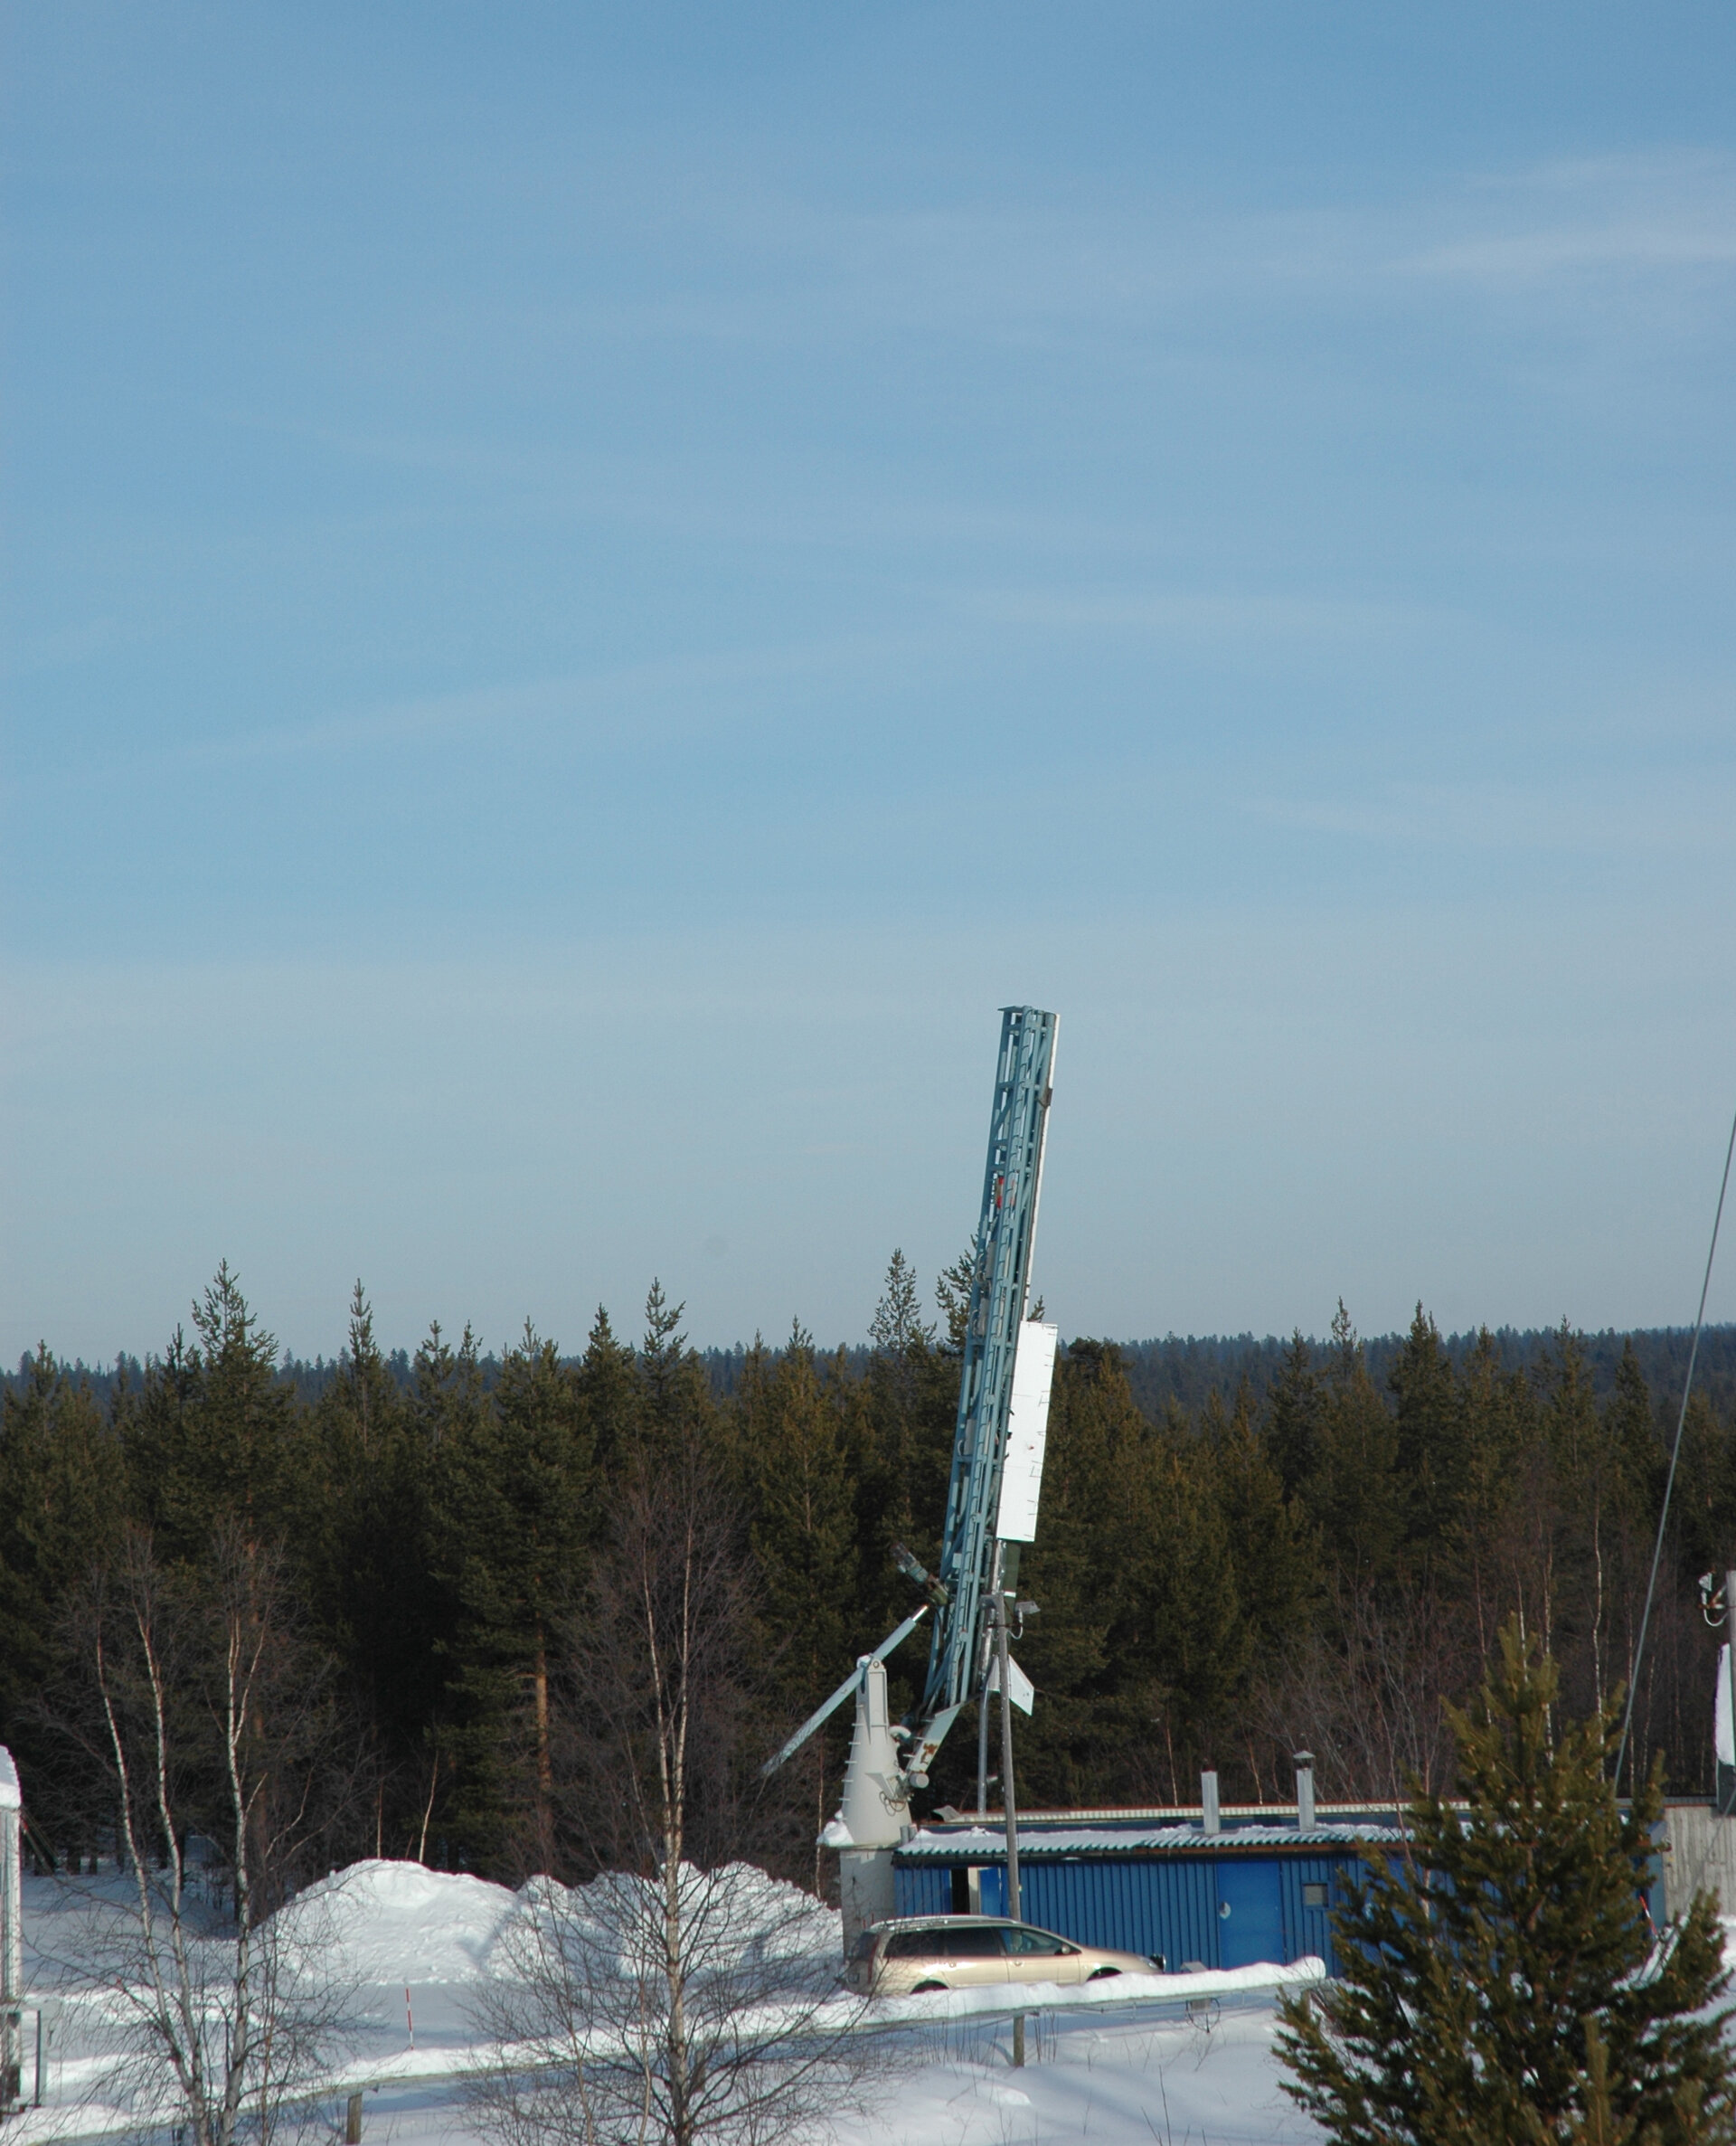 A previous REXUS rocket in launch position